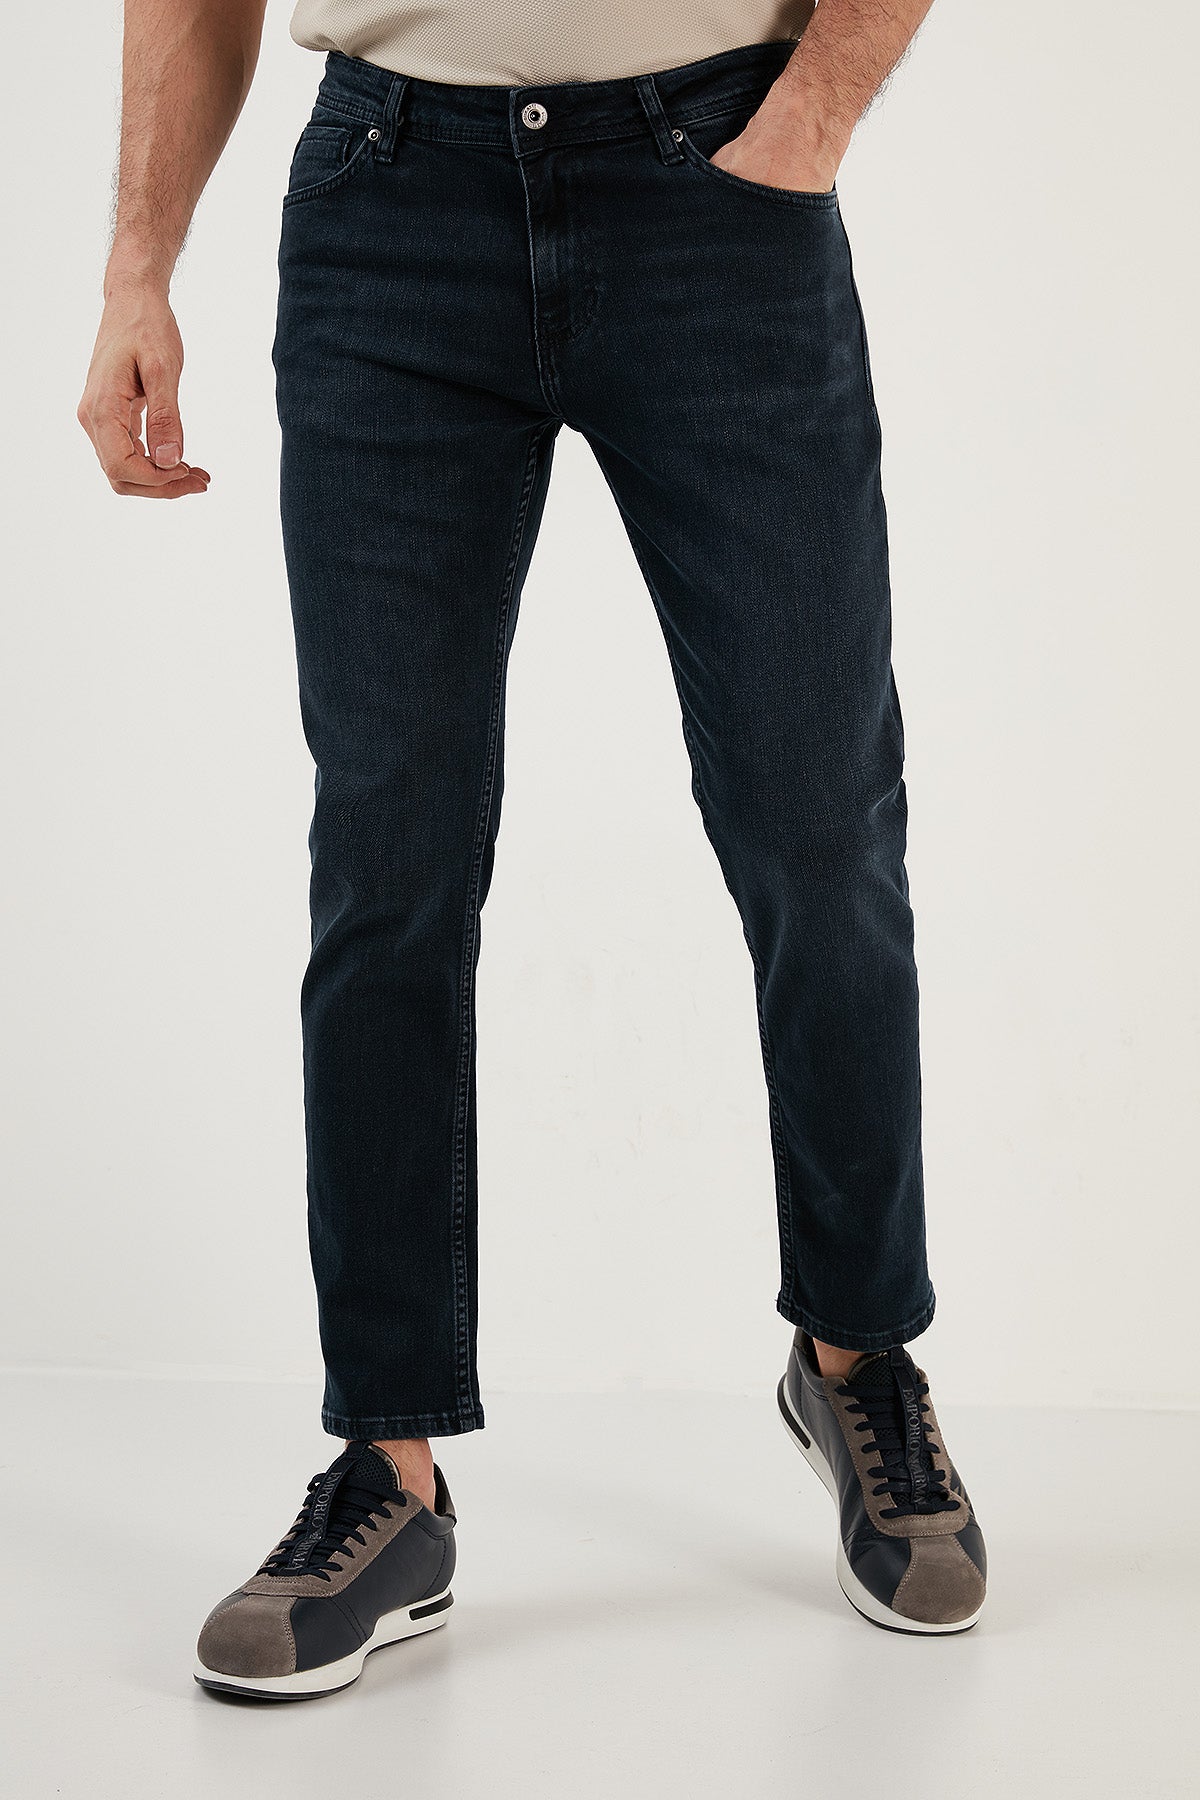 Buratti Cotton Normal Waist Regular Fit Piggy Leg Jeans Men's Denim Trousers